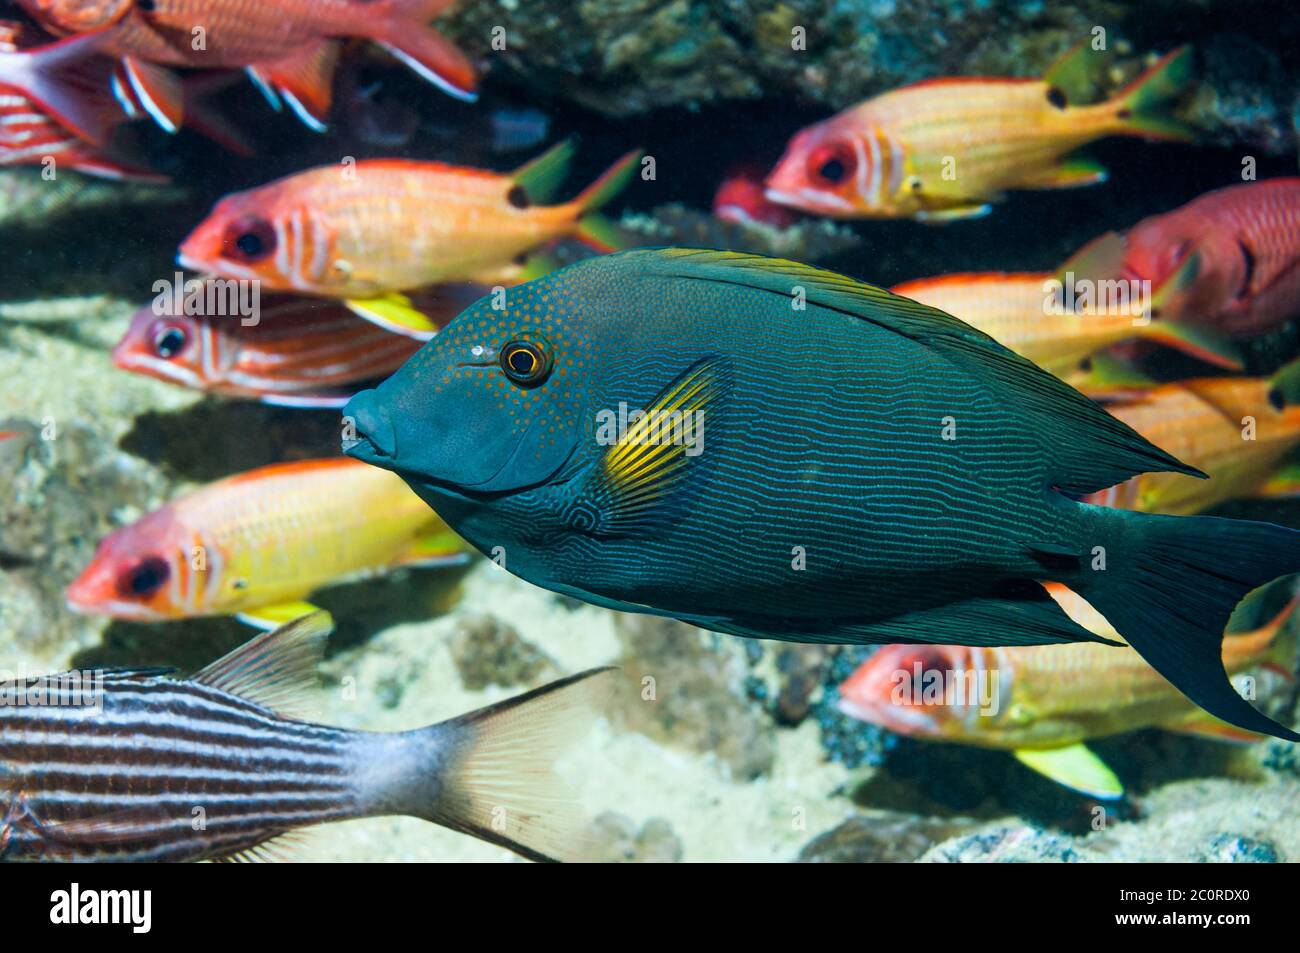 Striped bristletooth or Striated surgeonfish [Ctenochaetus striatus]. Egypt, Red Sea. Stock Photo